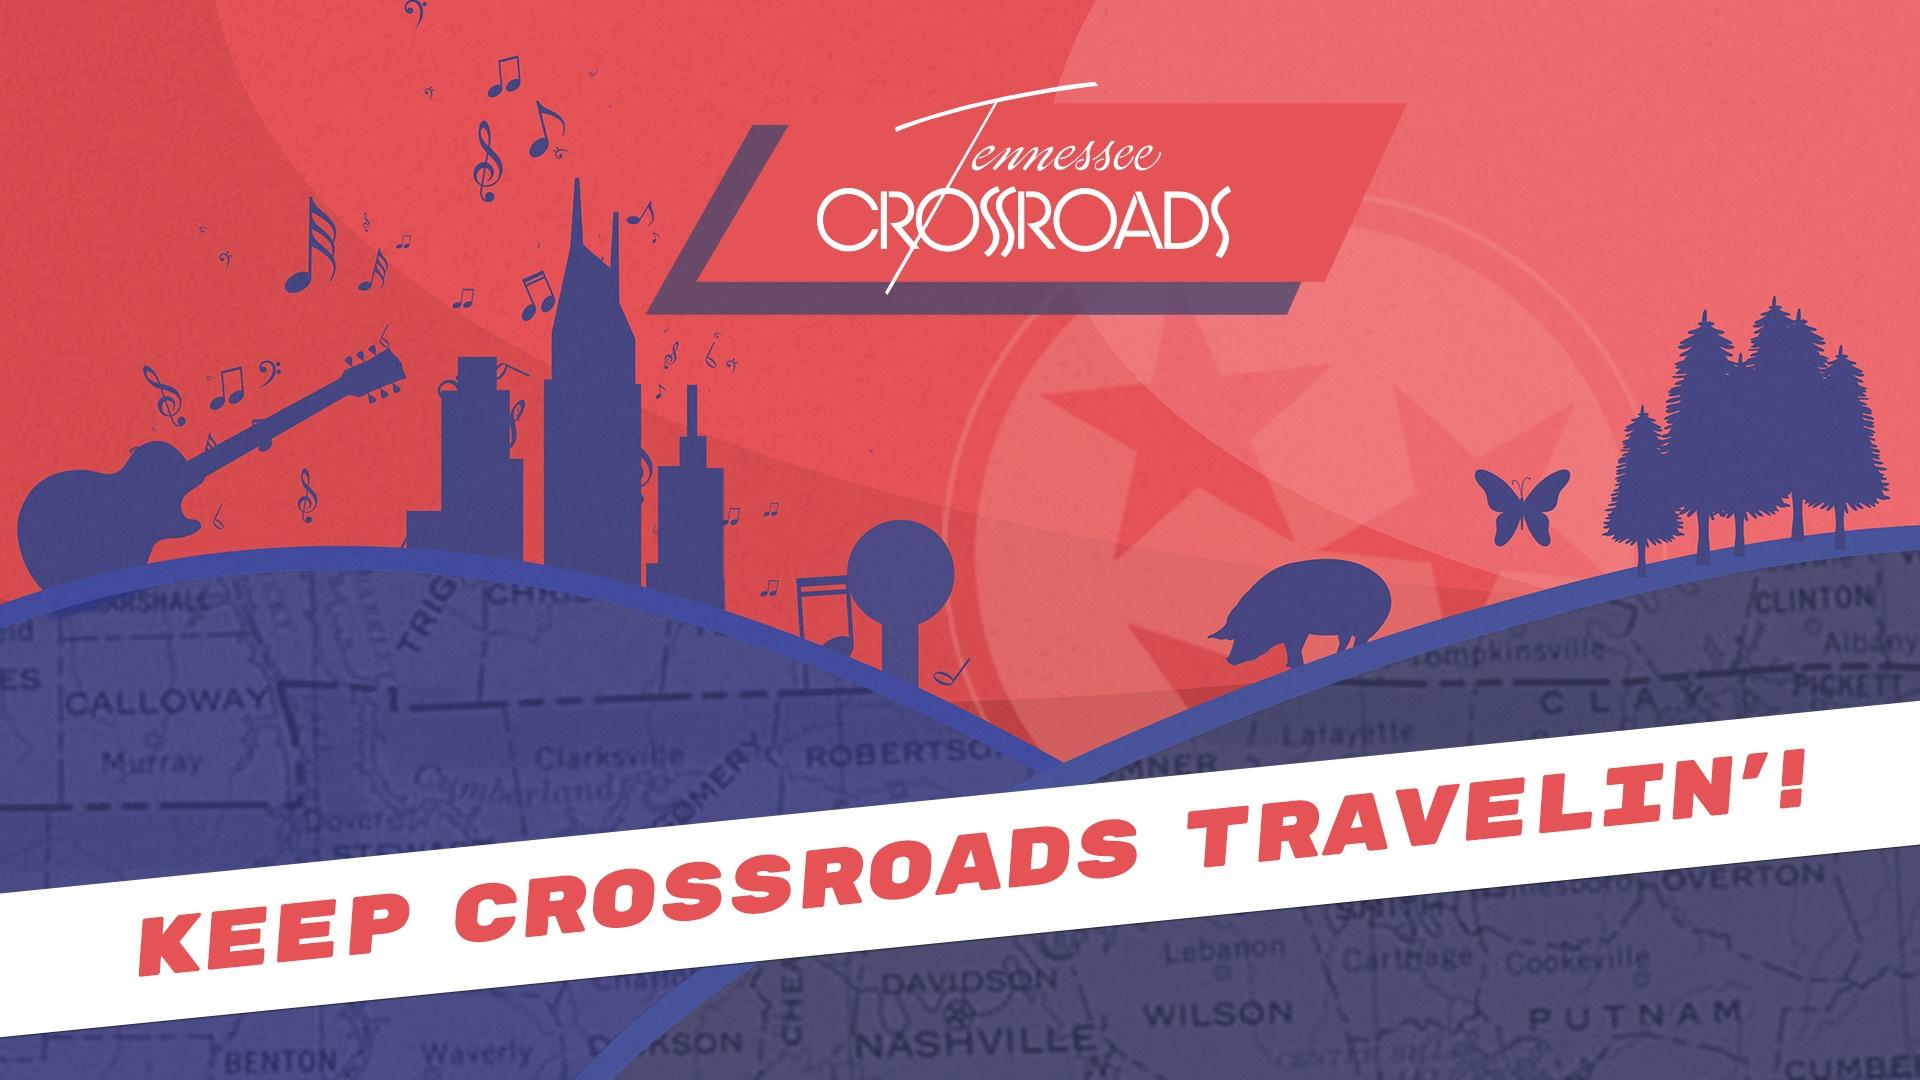 Keep NPT's Tennessee Crossroads Travelin'